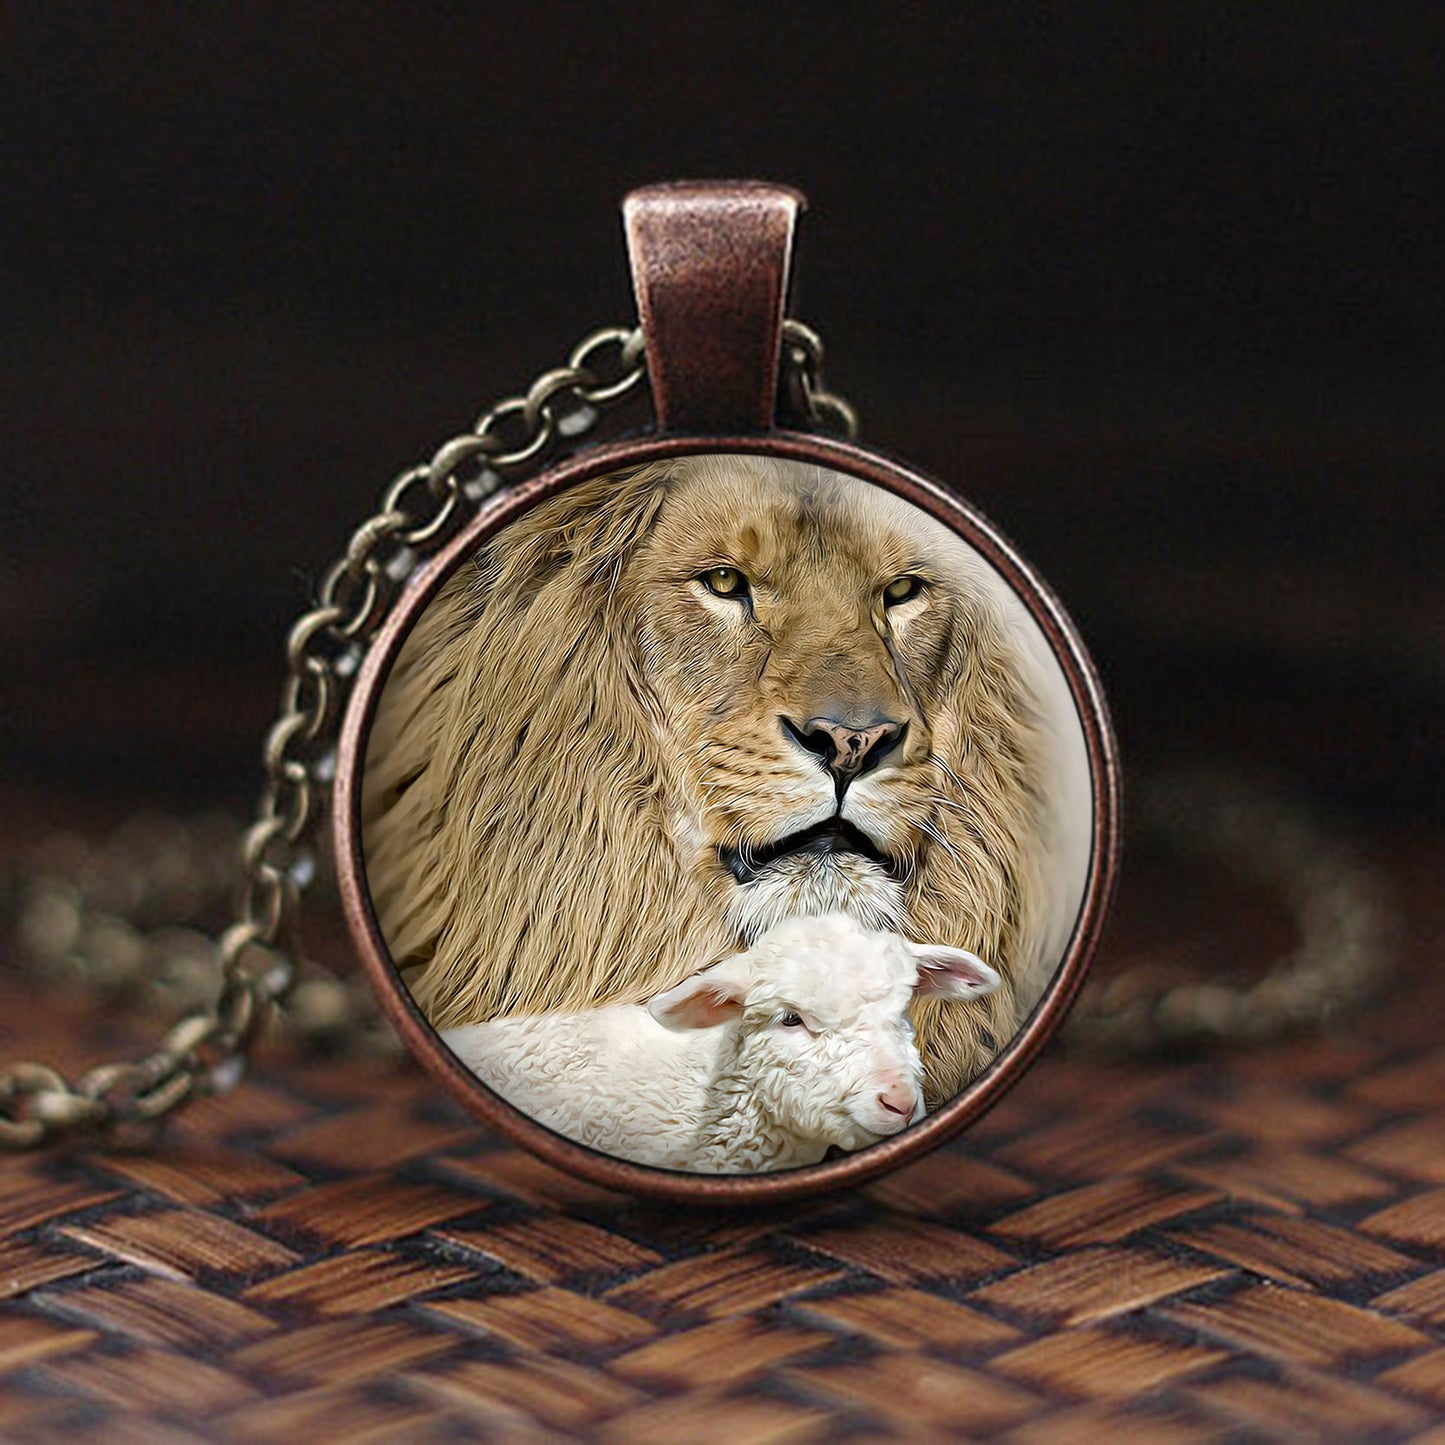 Lion And Sheep - Jesus Christ Necklace - Religious Pendant - Catholic Necklace - Ciaocustom